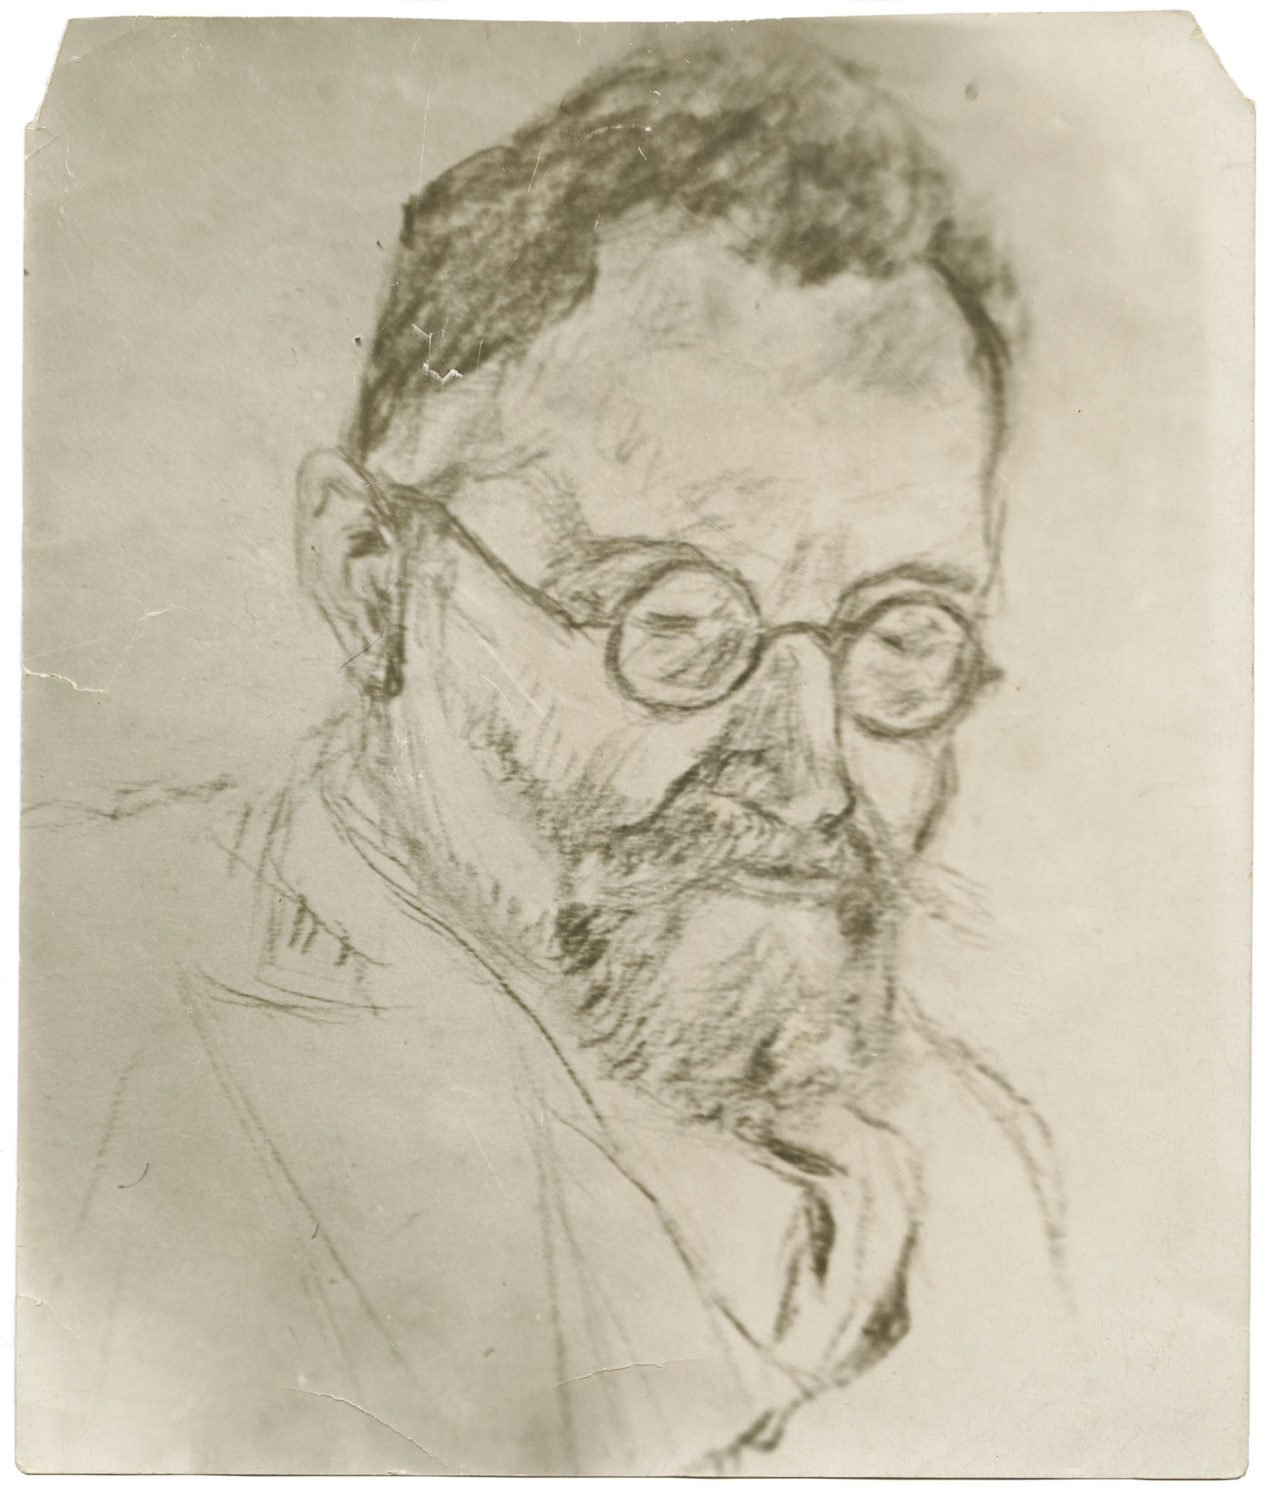 Portrait sketch of a man